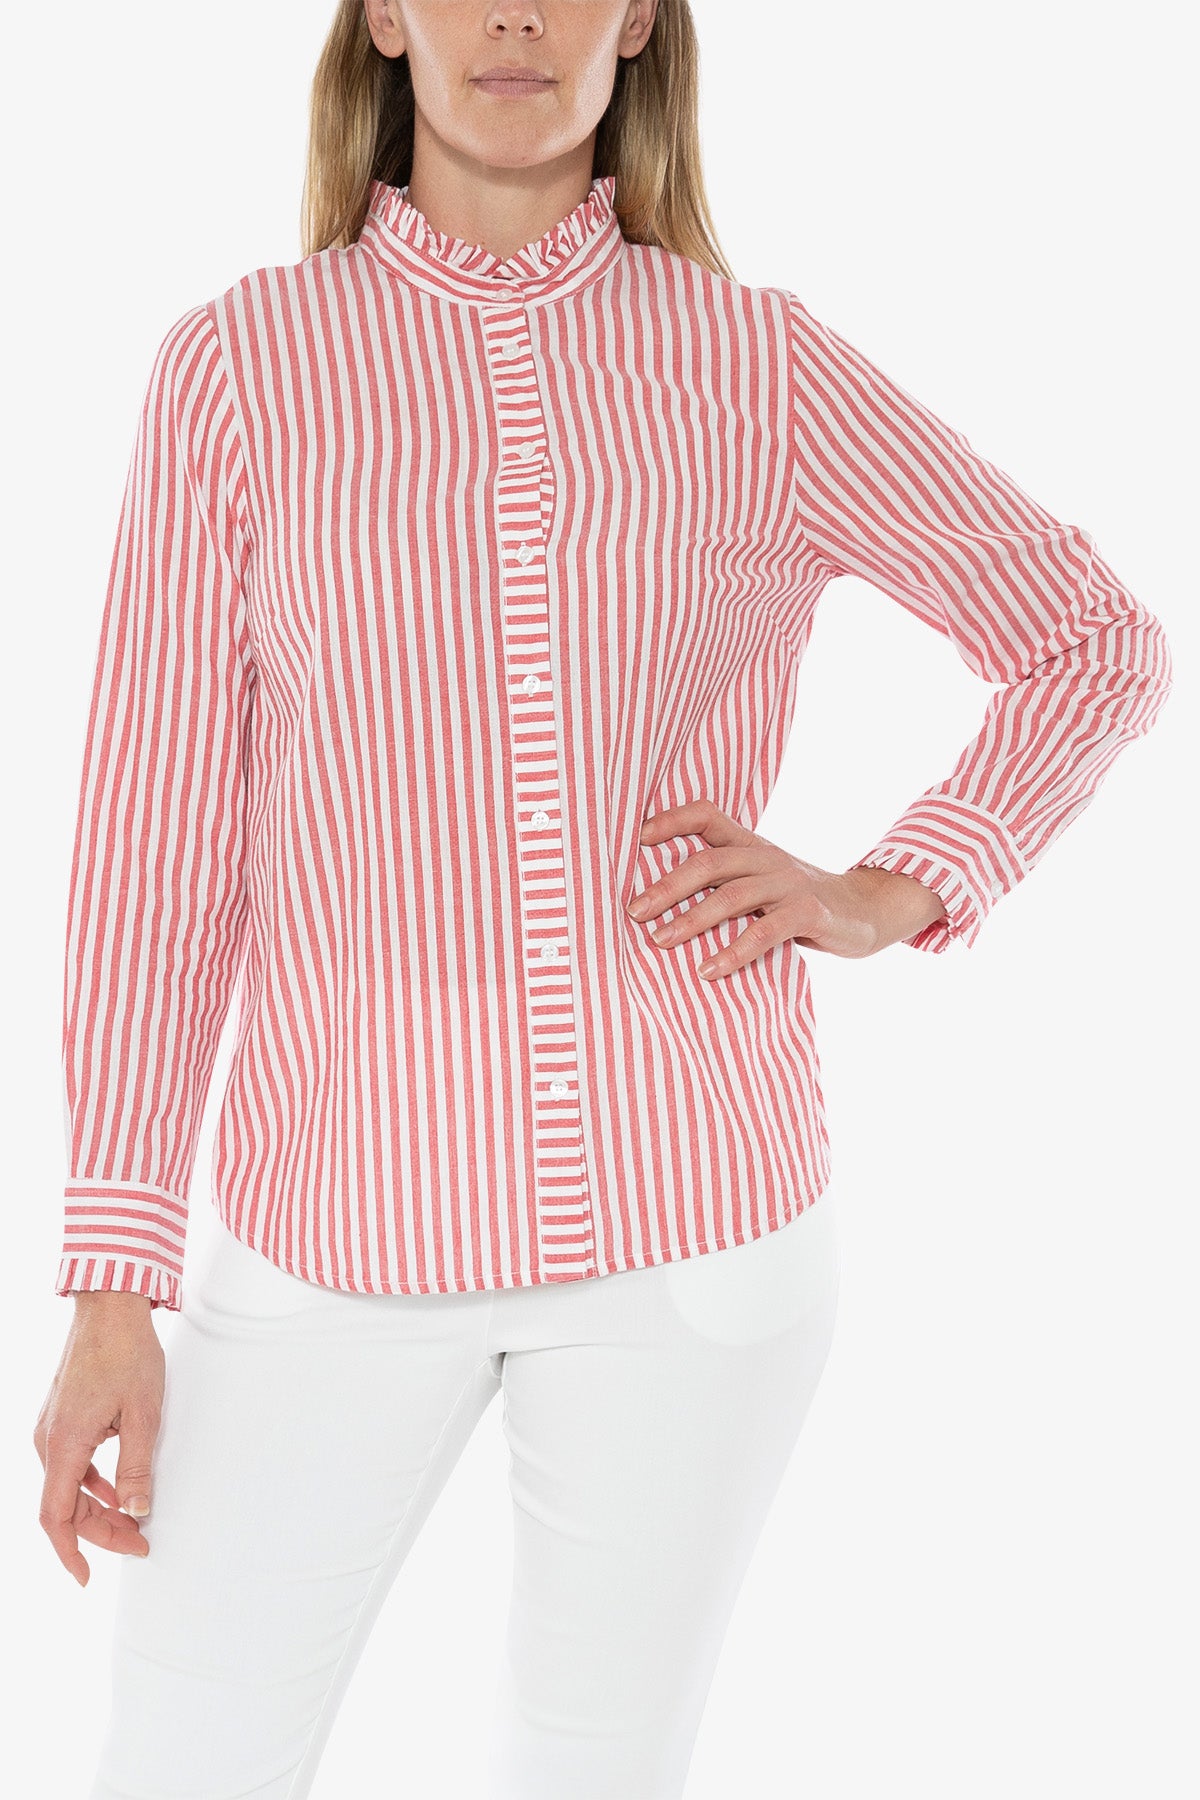 Stripe Shirt White and Melon